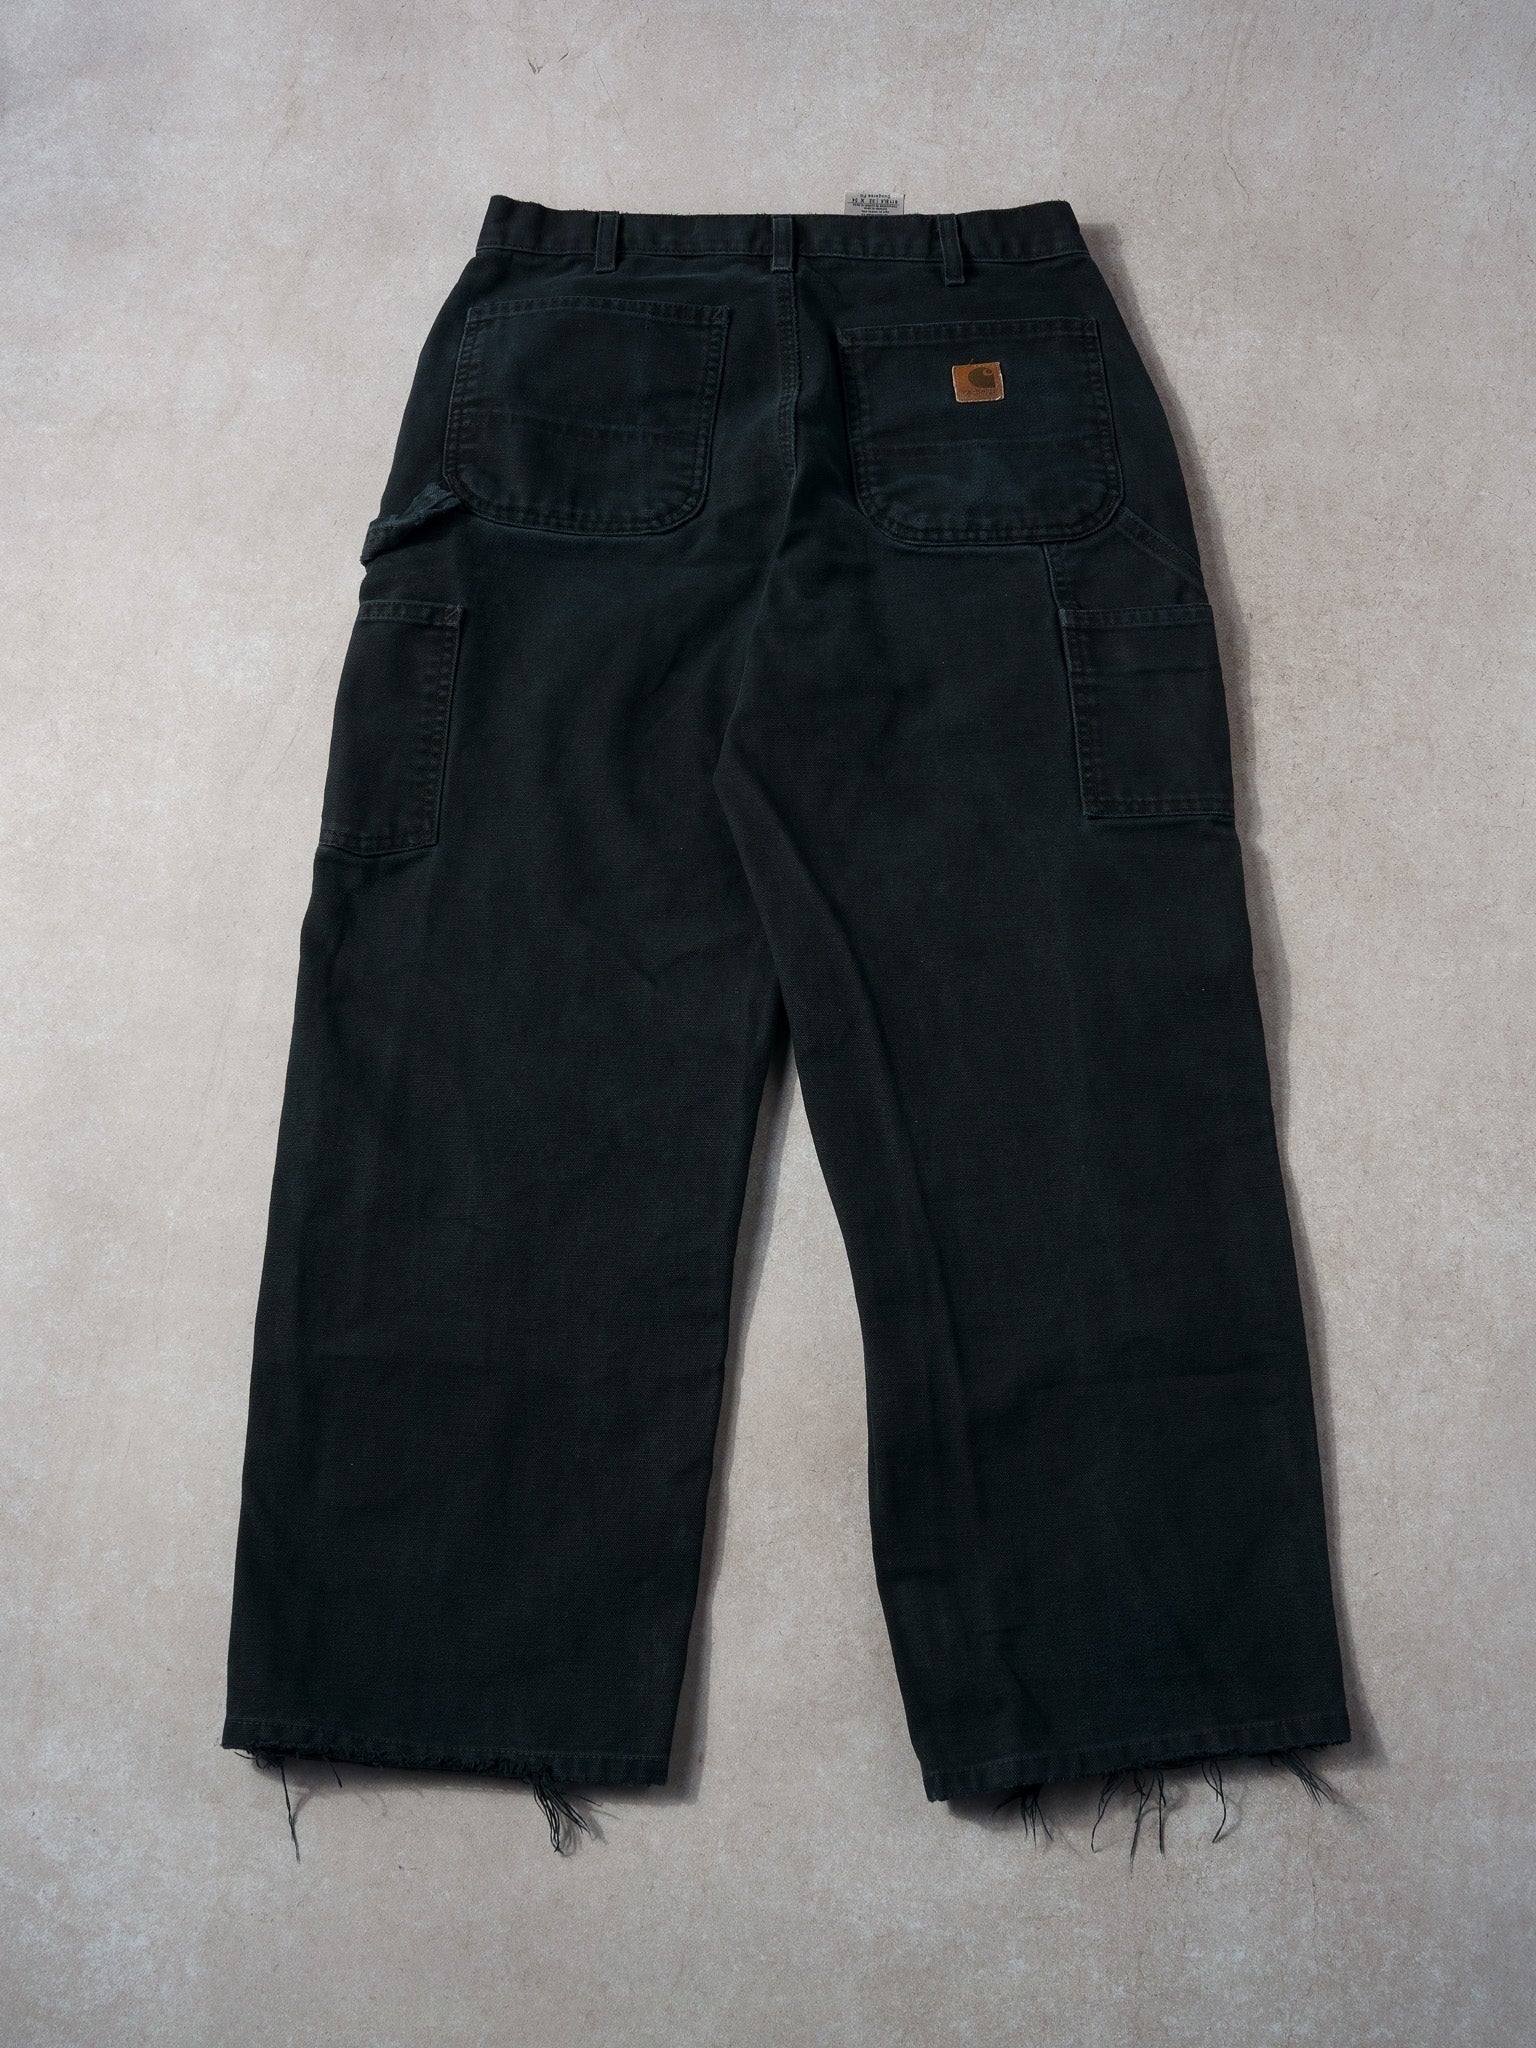 Vintage 90s Black Carhartt Dungeree Fit Carpenter Pants (32x28)